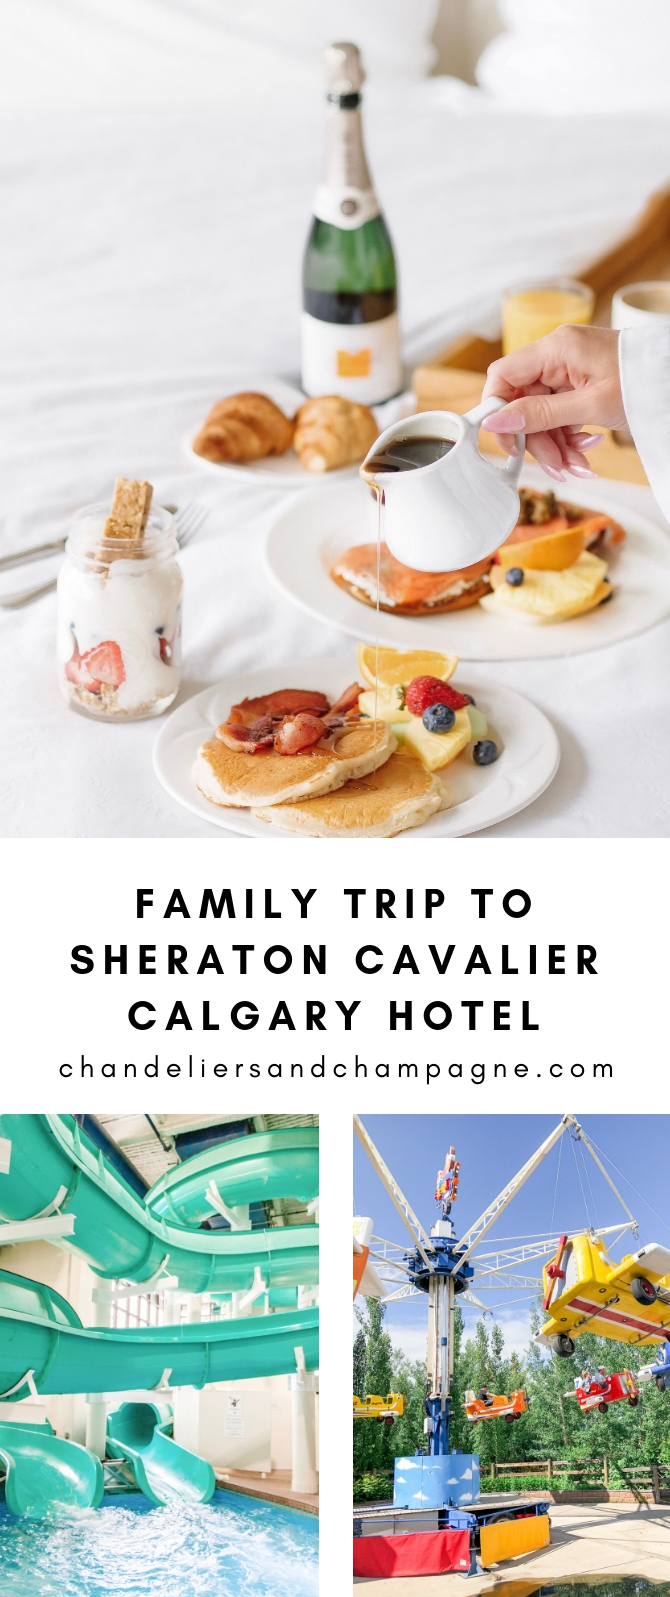 Family trip to Sheraton Cavalier Calgary Hotel